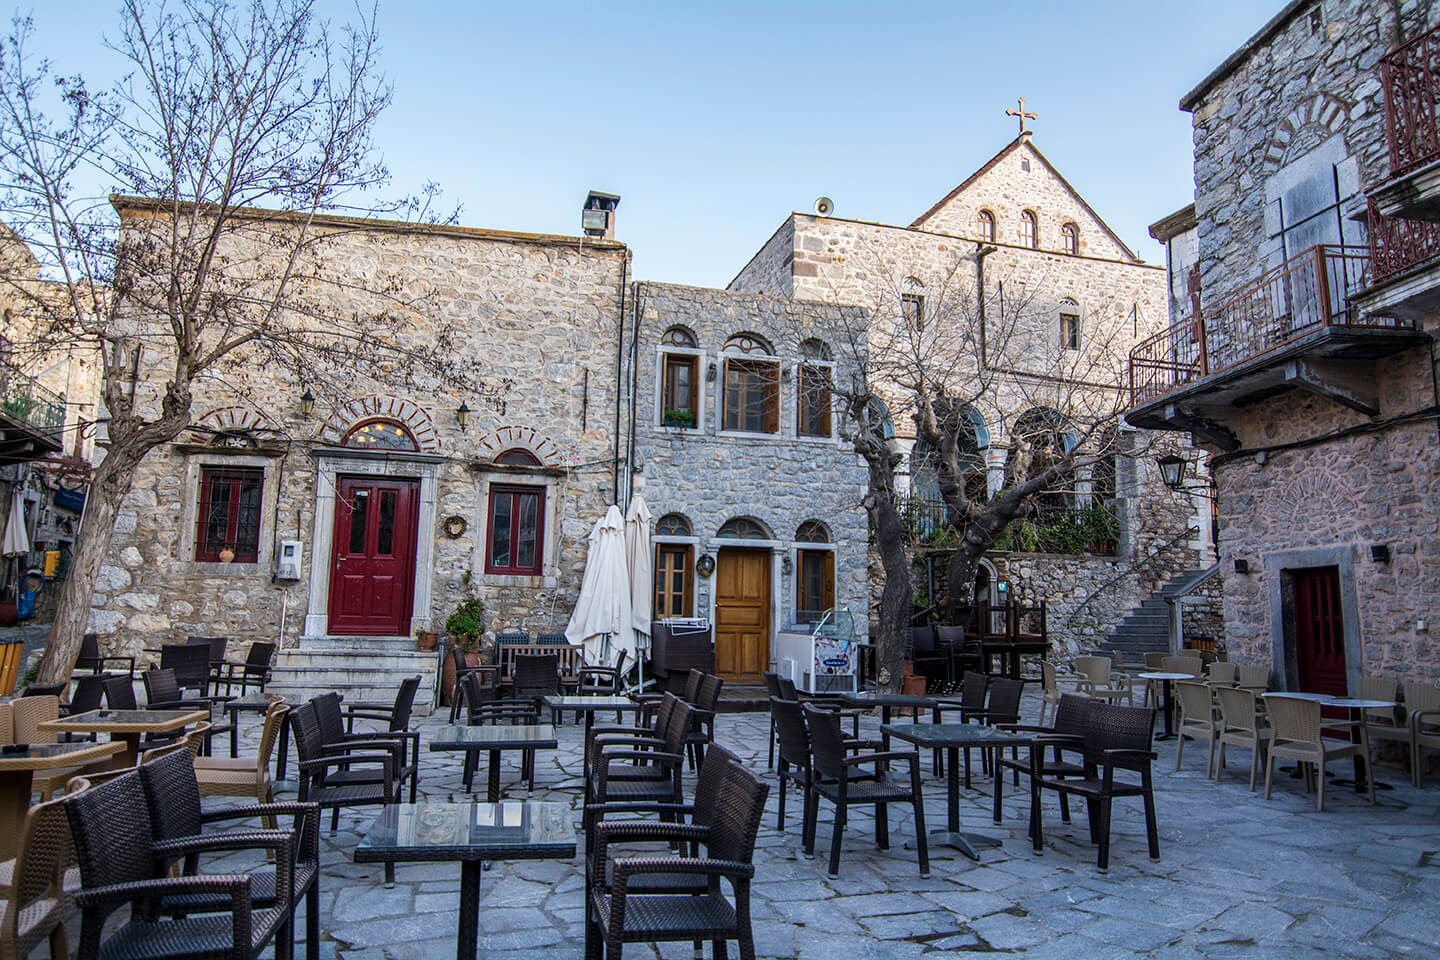 Mesta, a medieval village in south Chios